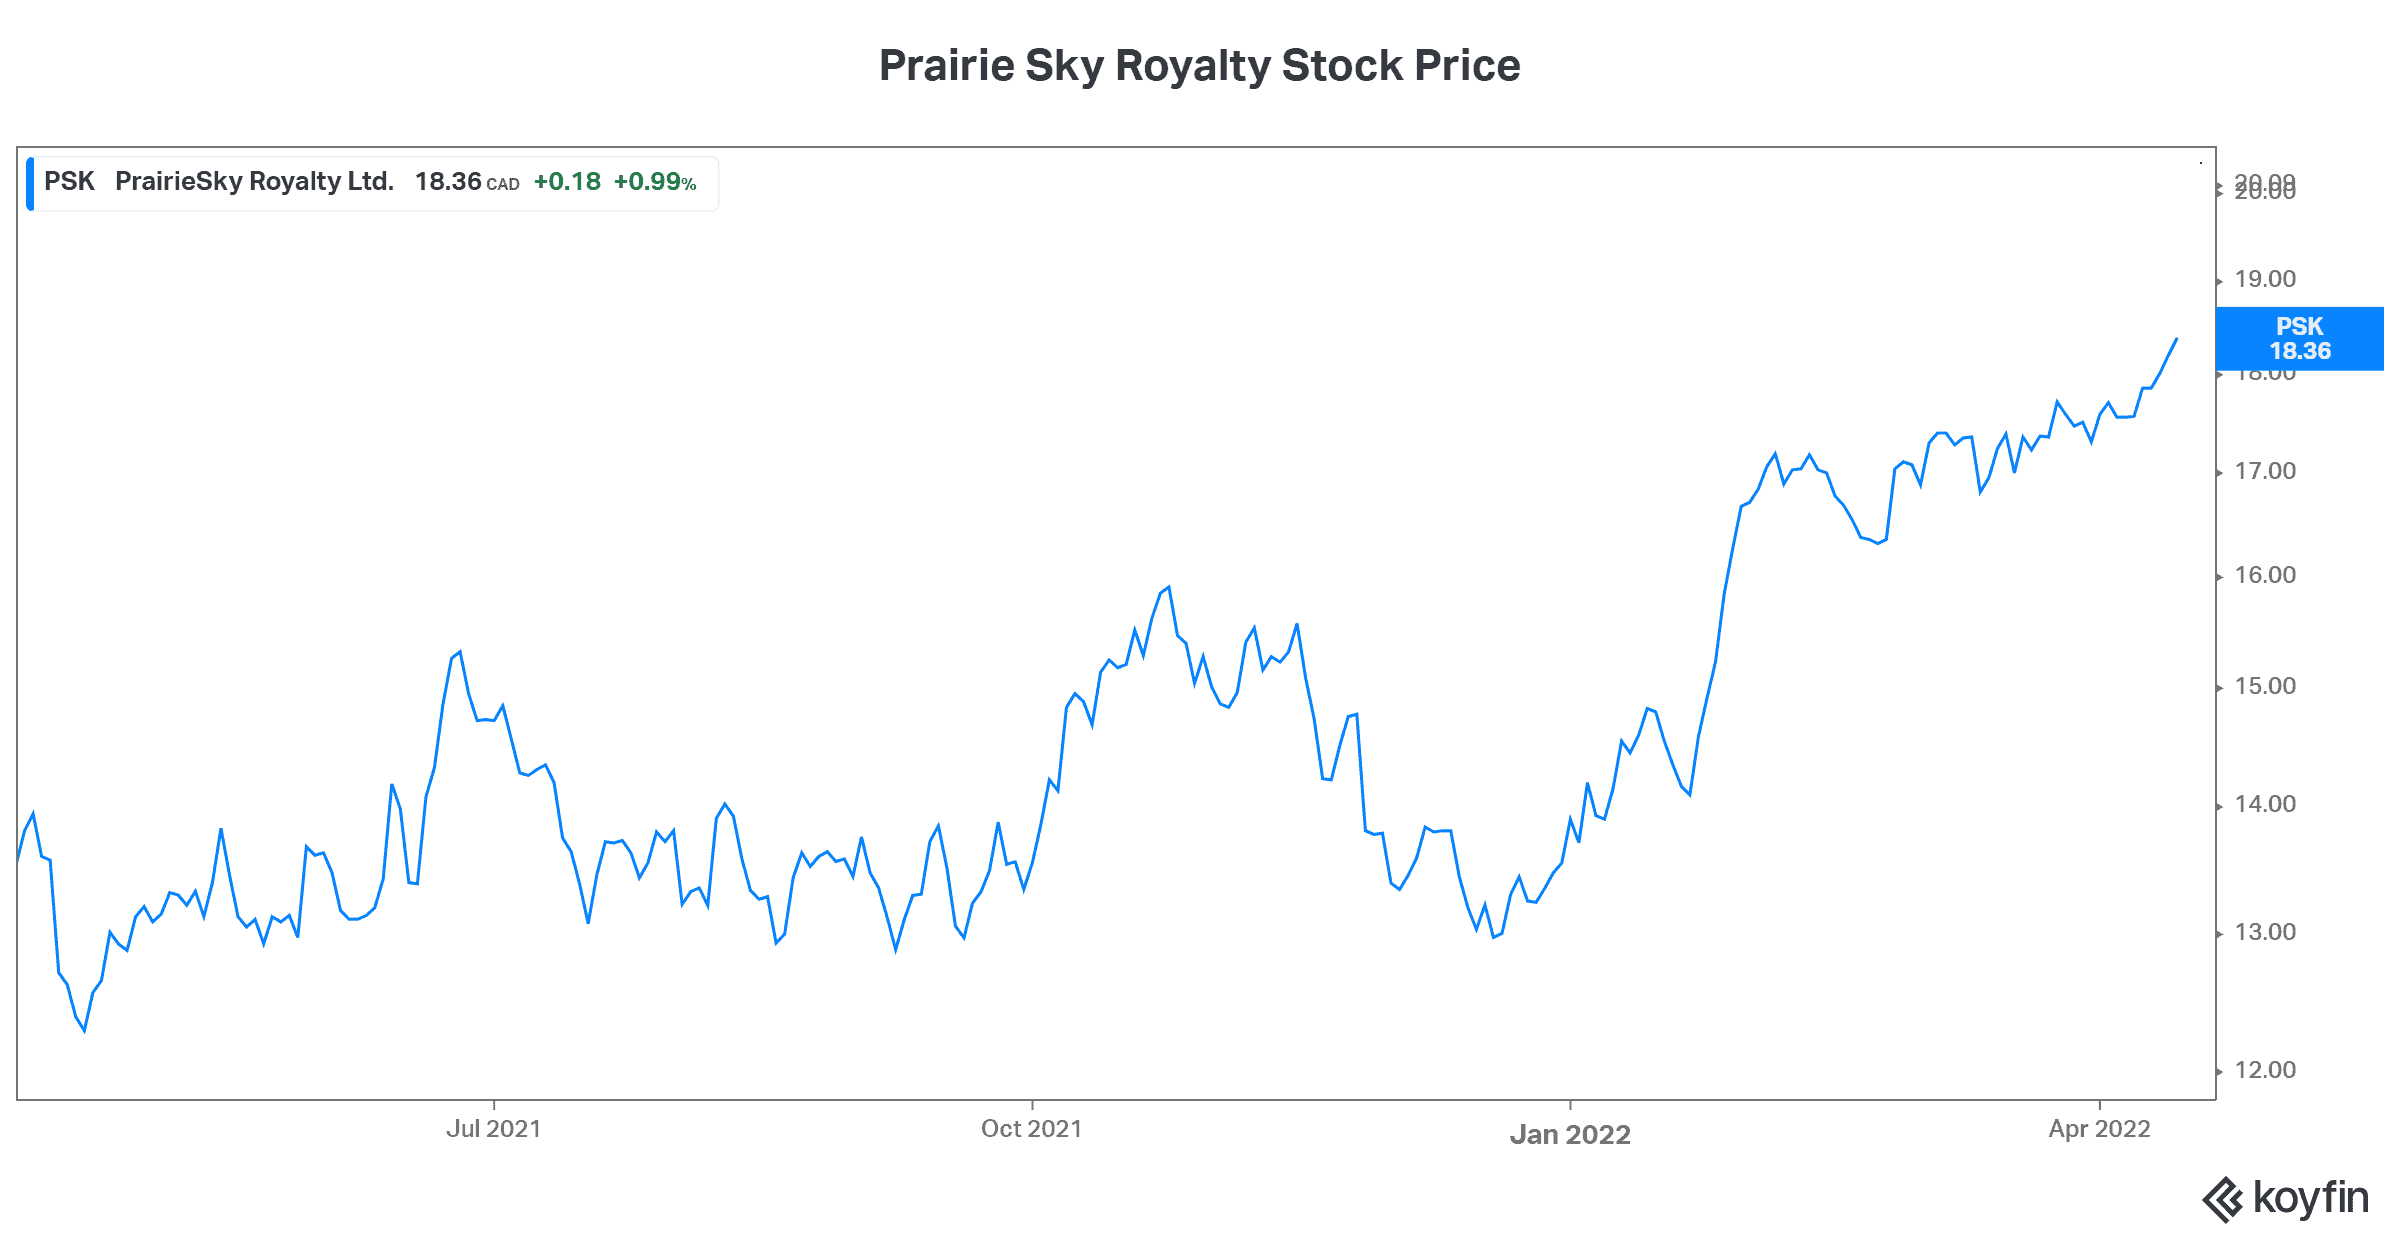 Energy stock Prairie sky earnings